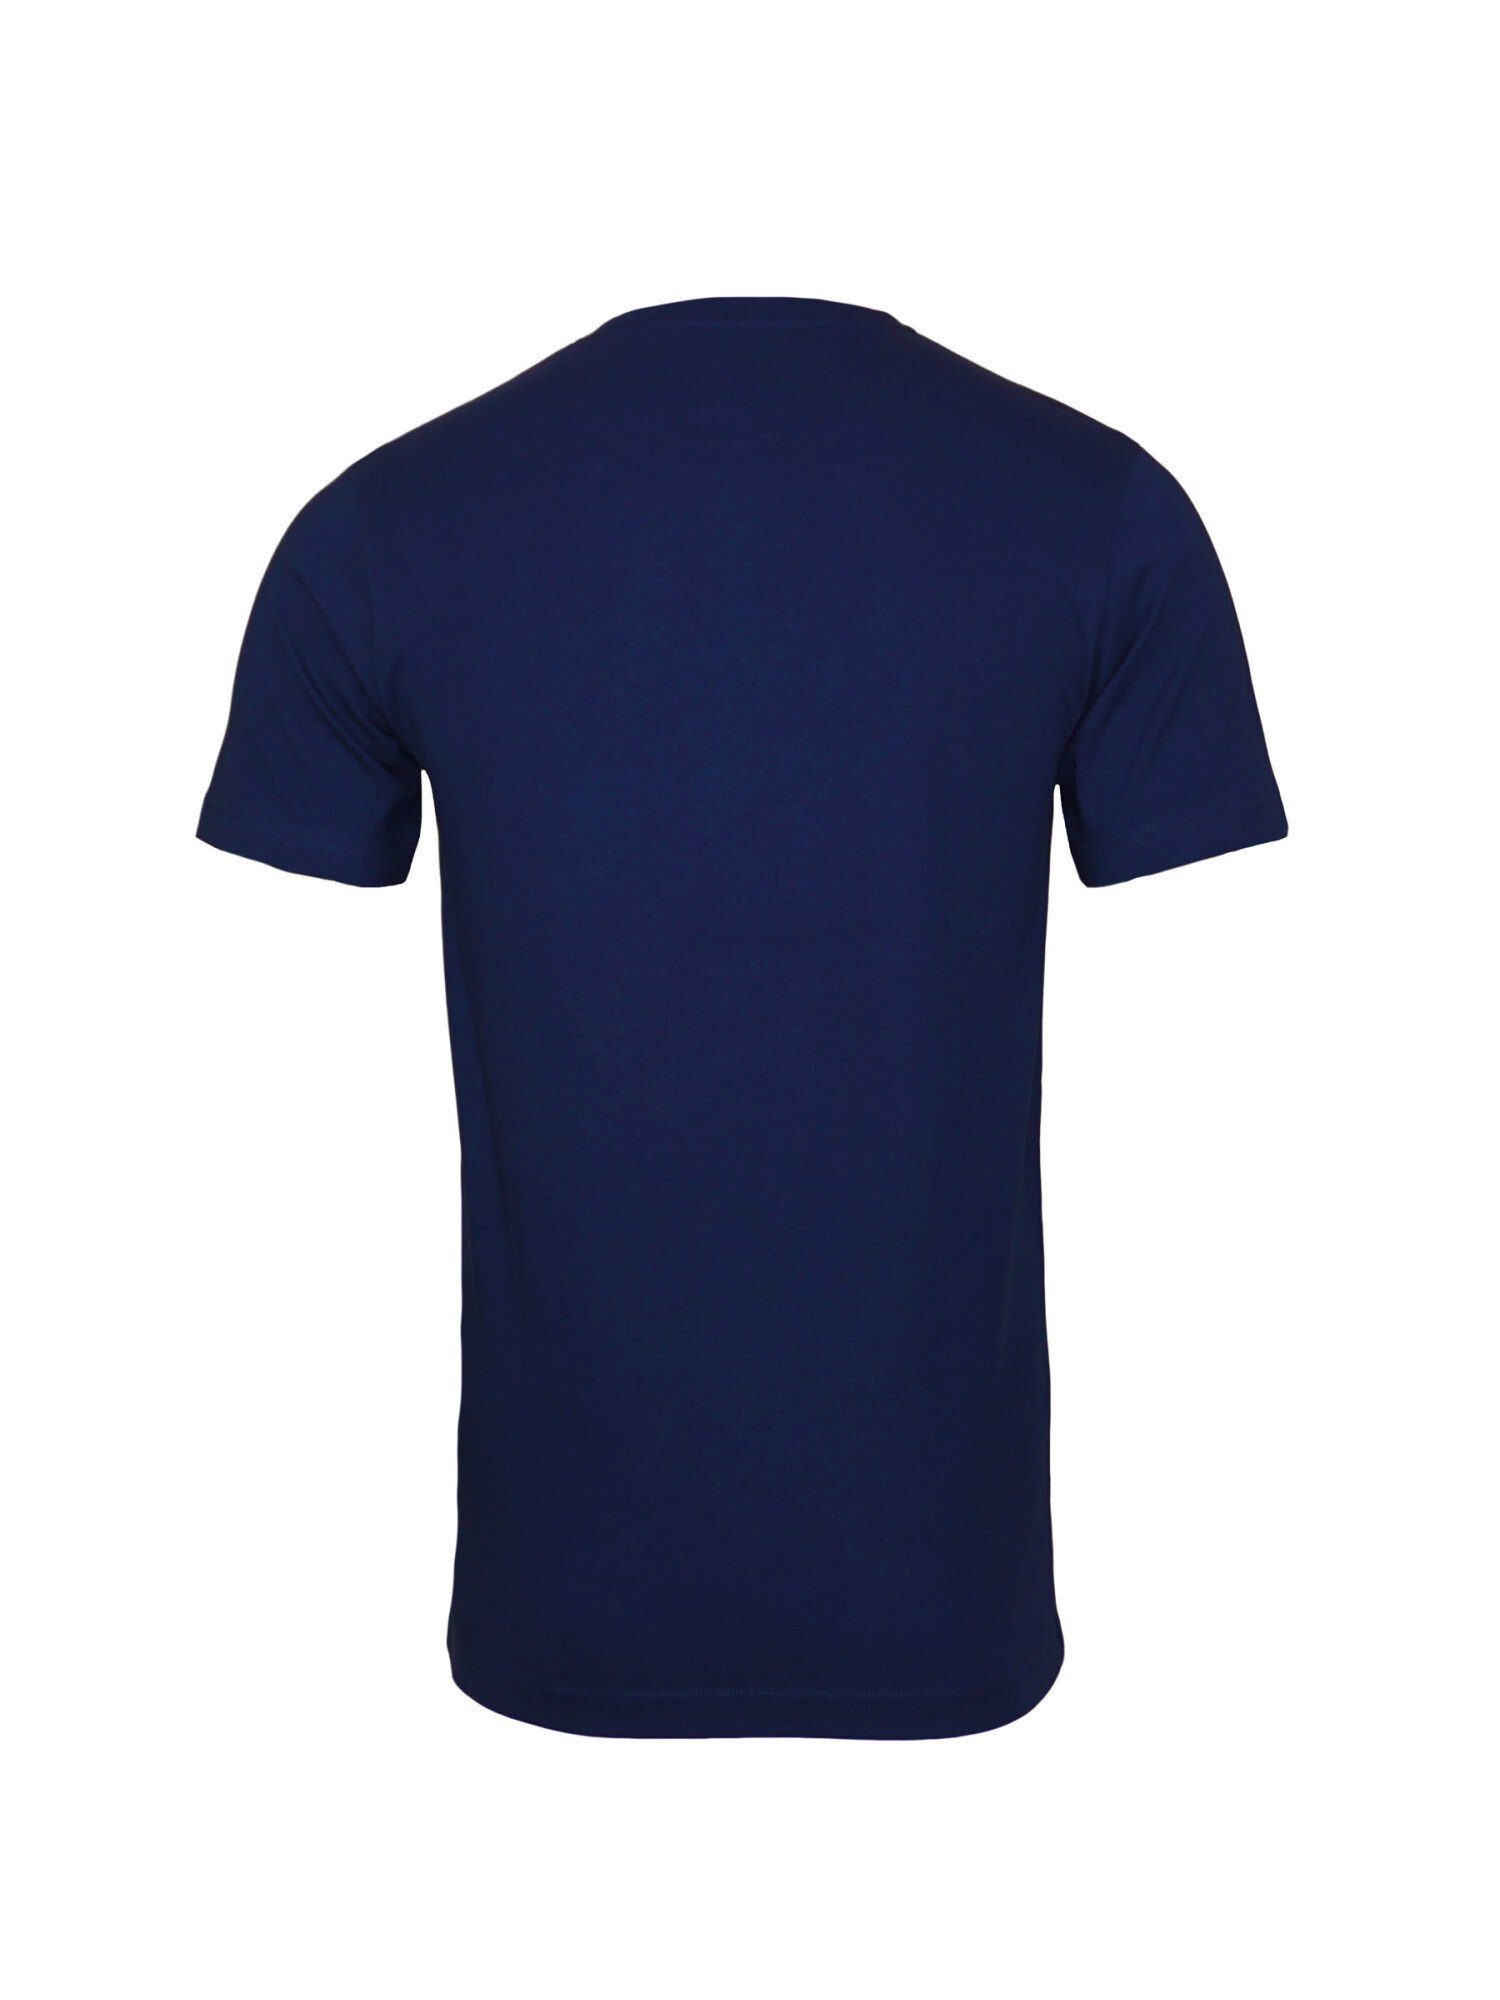 Shortsleeve Rundhals Harvey Basic HM T-Shirt Miller dunkelblau T-Shirt